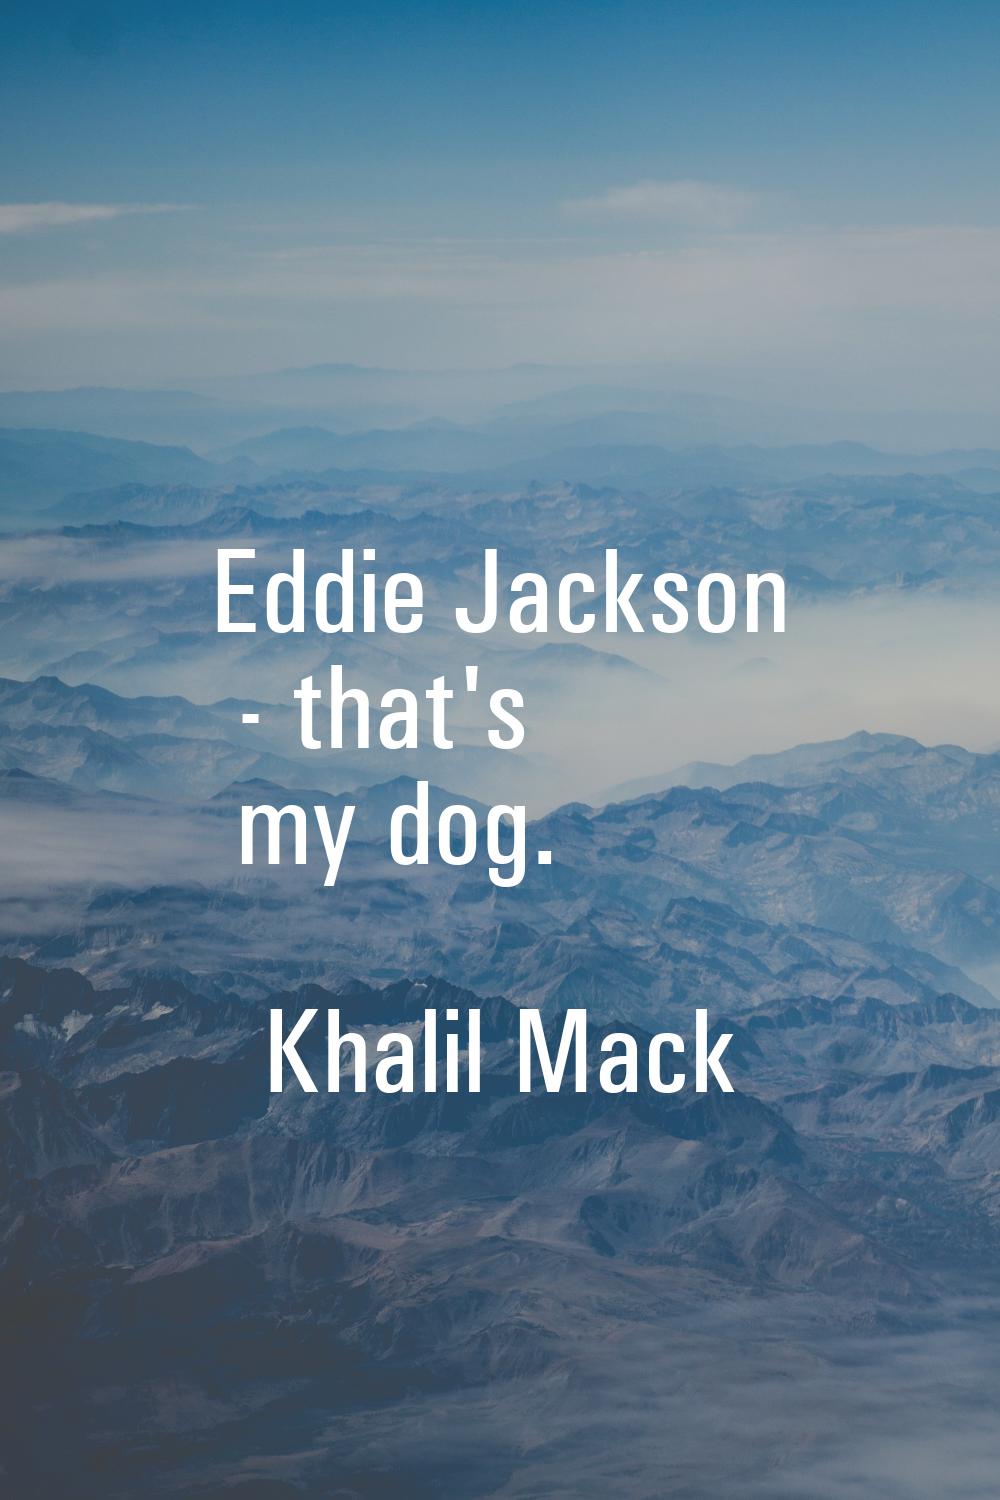 Eddie Jackson - that's my dog.